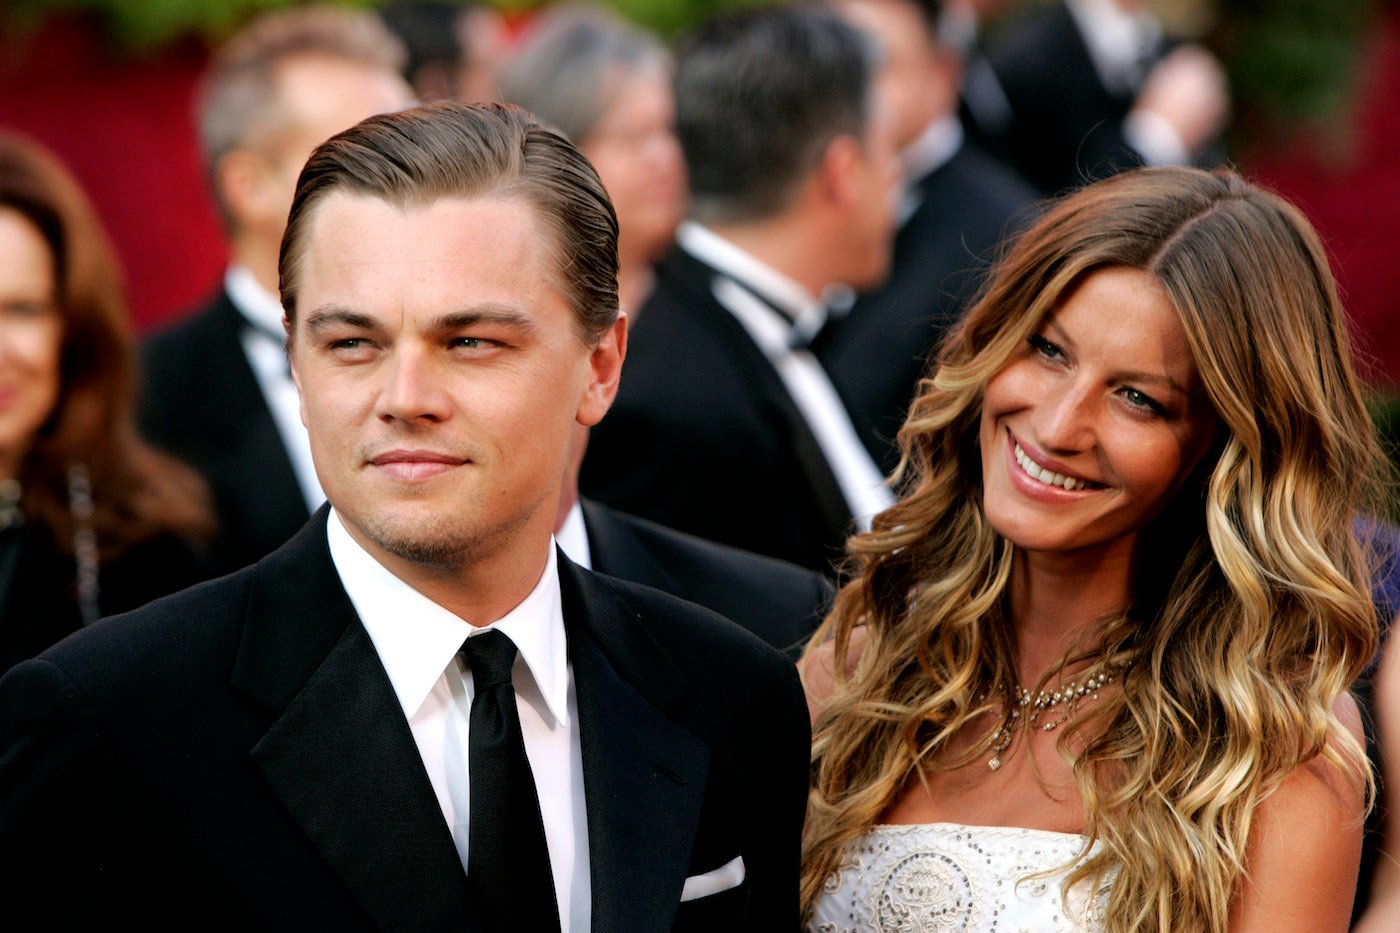 Leonardo DiCaprio and Gisele Bundchen at the Academy Awards